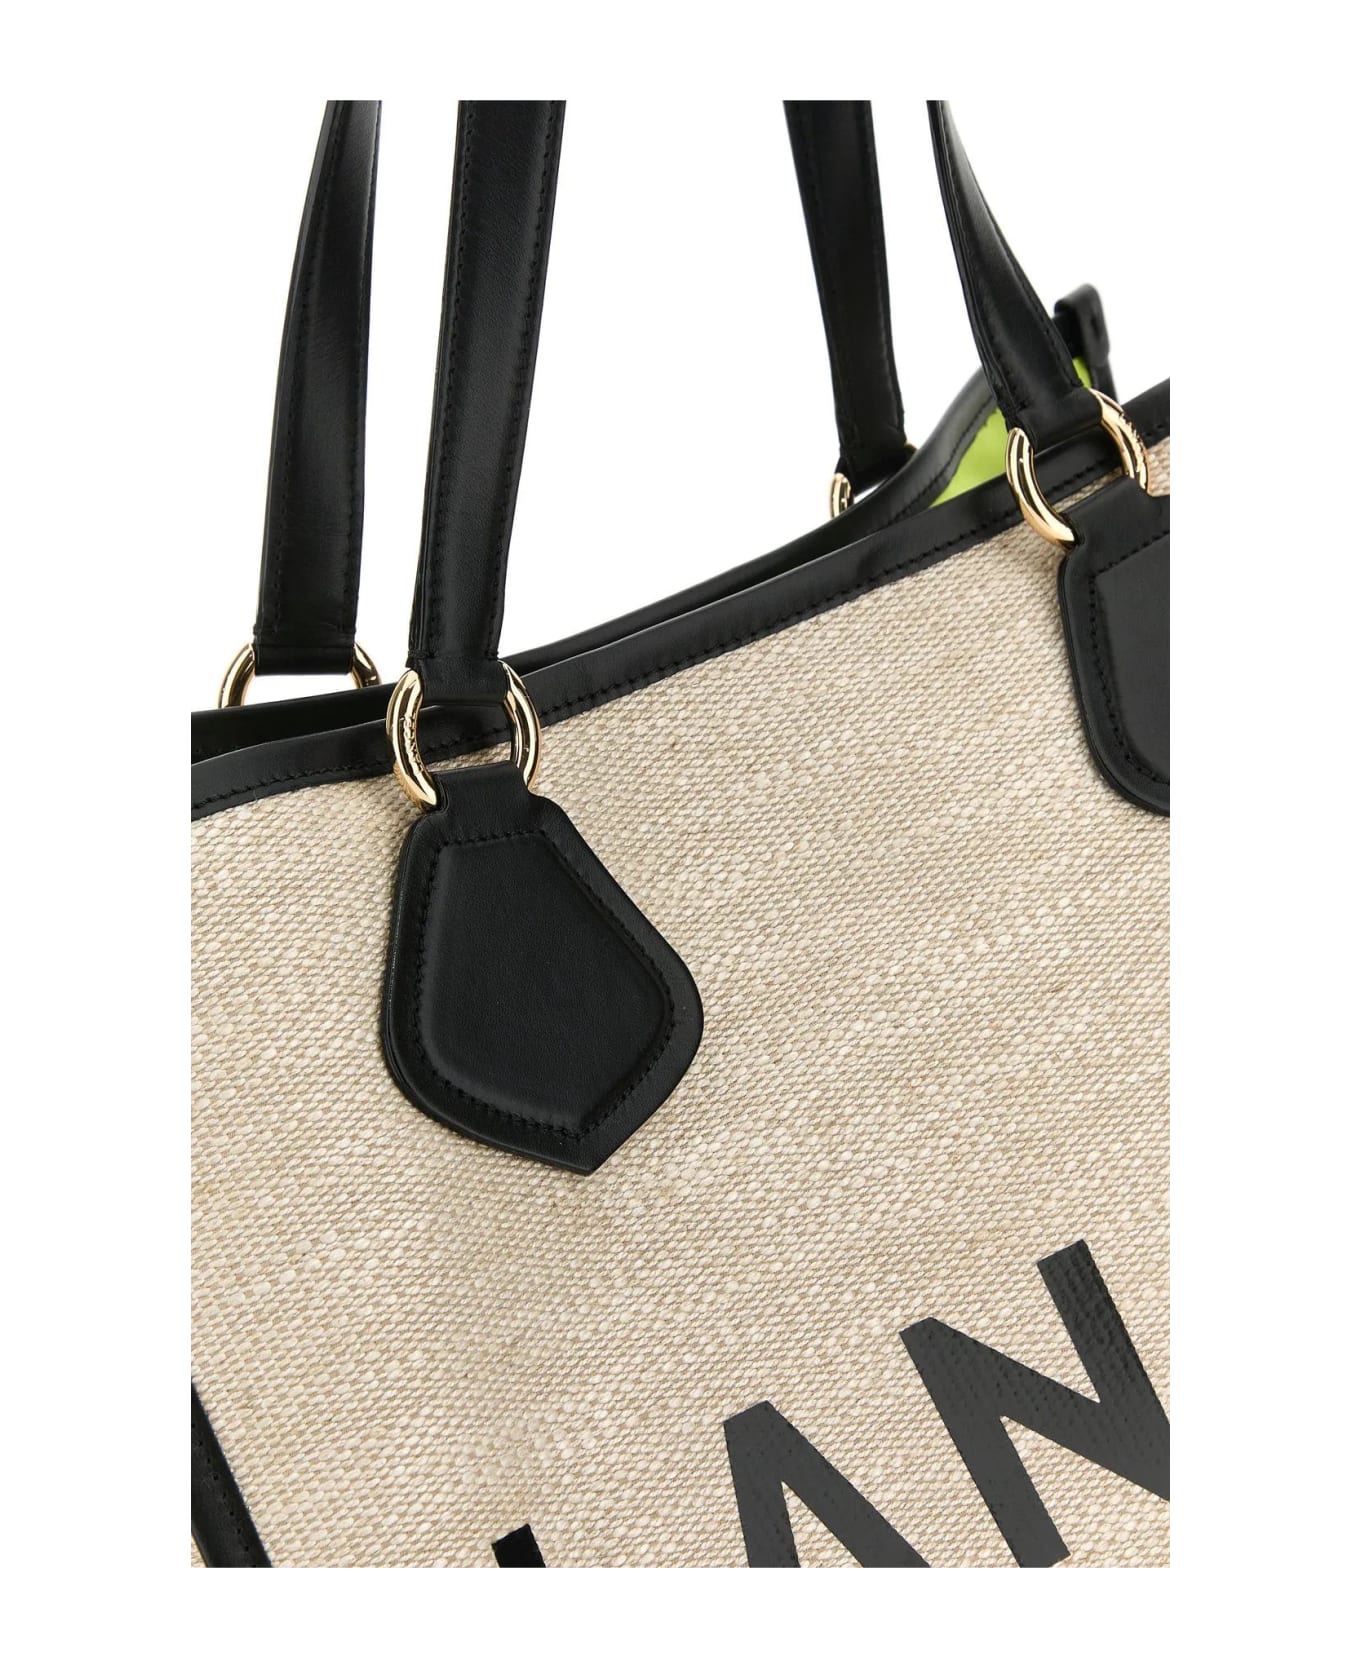 Lancel Multicolor Canvas Summer Shopping Bag - Black